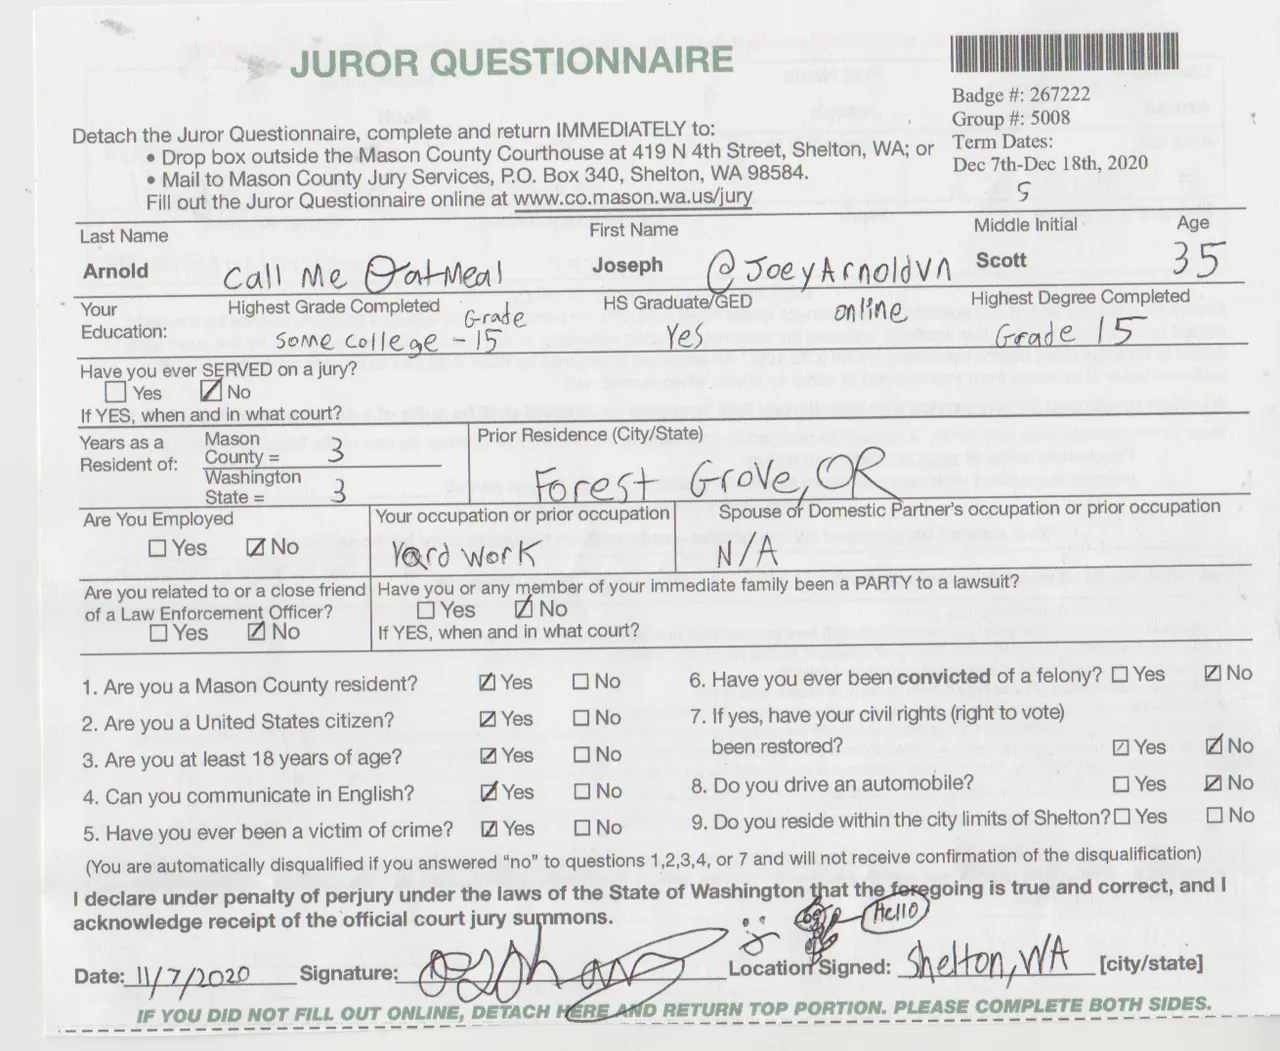 2020-11-07 - Saturday - 03:00 PM LMS JA - Jury Duty Request - Shelton WA - Form & Survey Pages Update-1.png